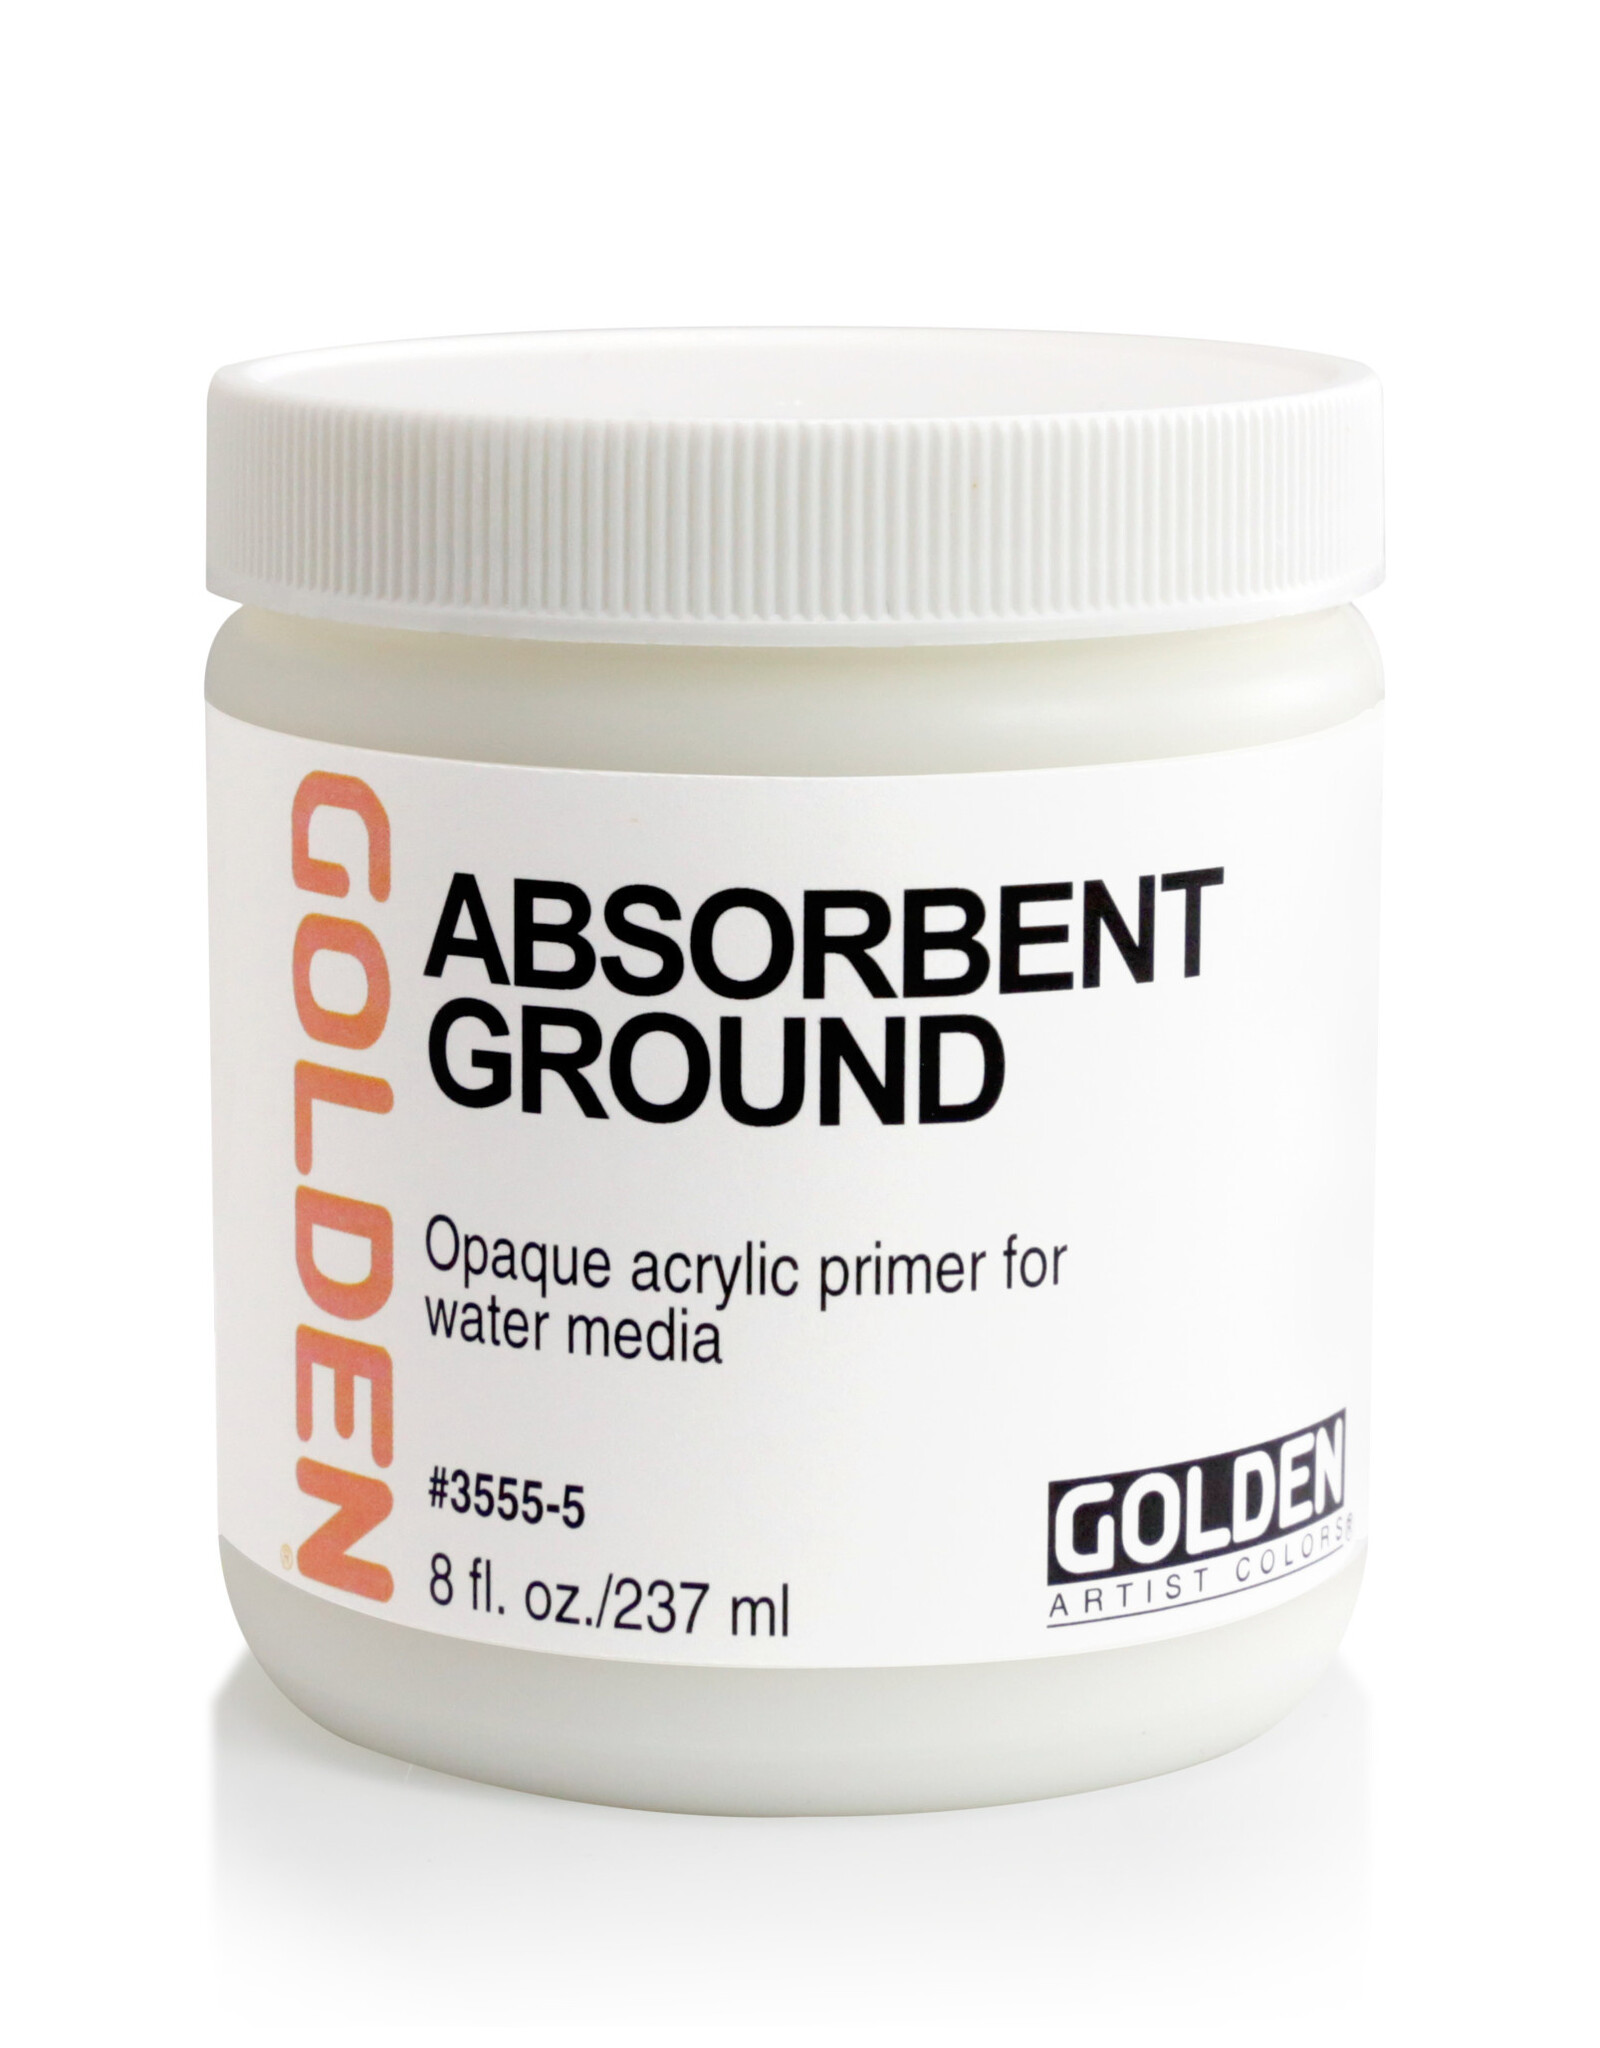 Golden Golden Absorbent Ground 8 oz jar